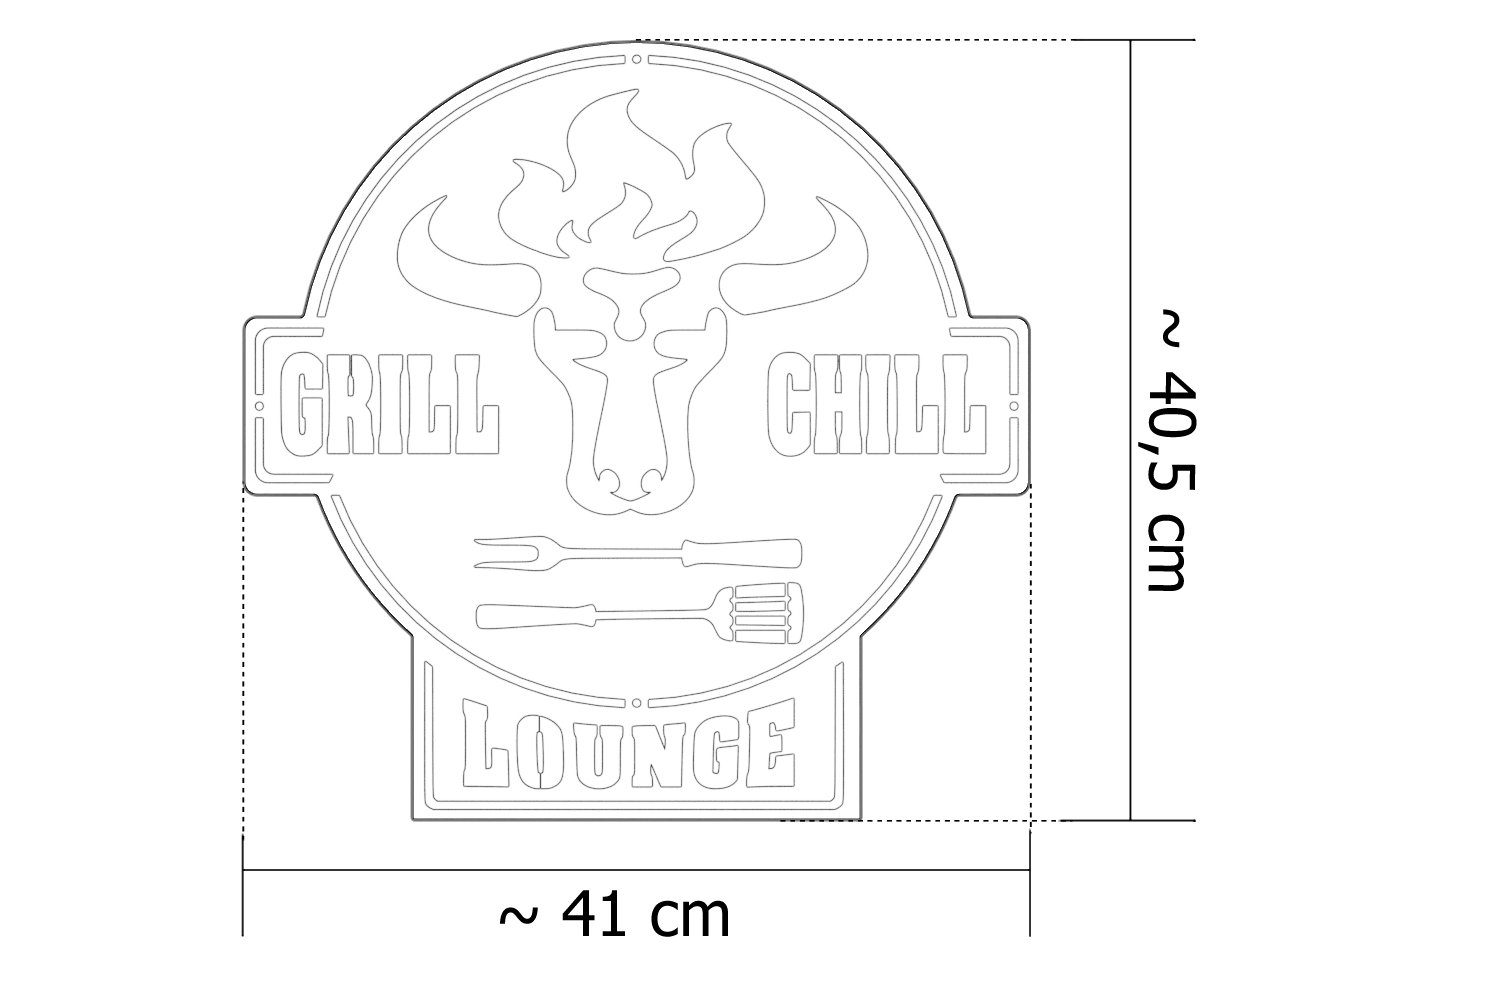 Stahl GC01-B Lounge Bulle Schwarz Grill Chill + Lounge & tuning-art Schild Grill Wanddekoobjekt Schwarz